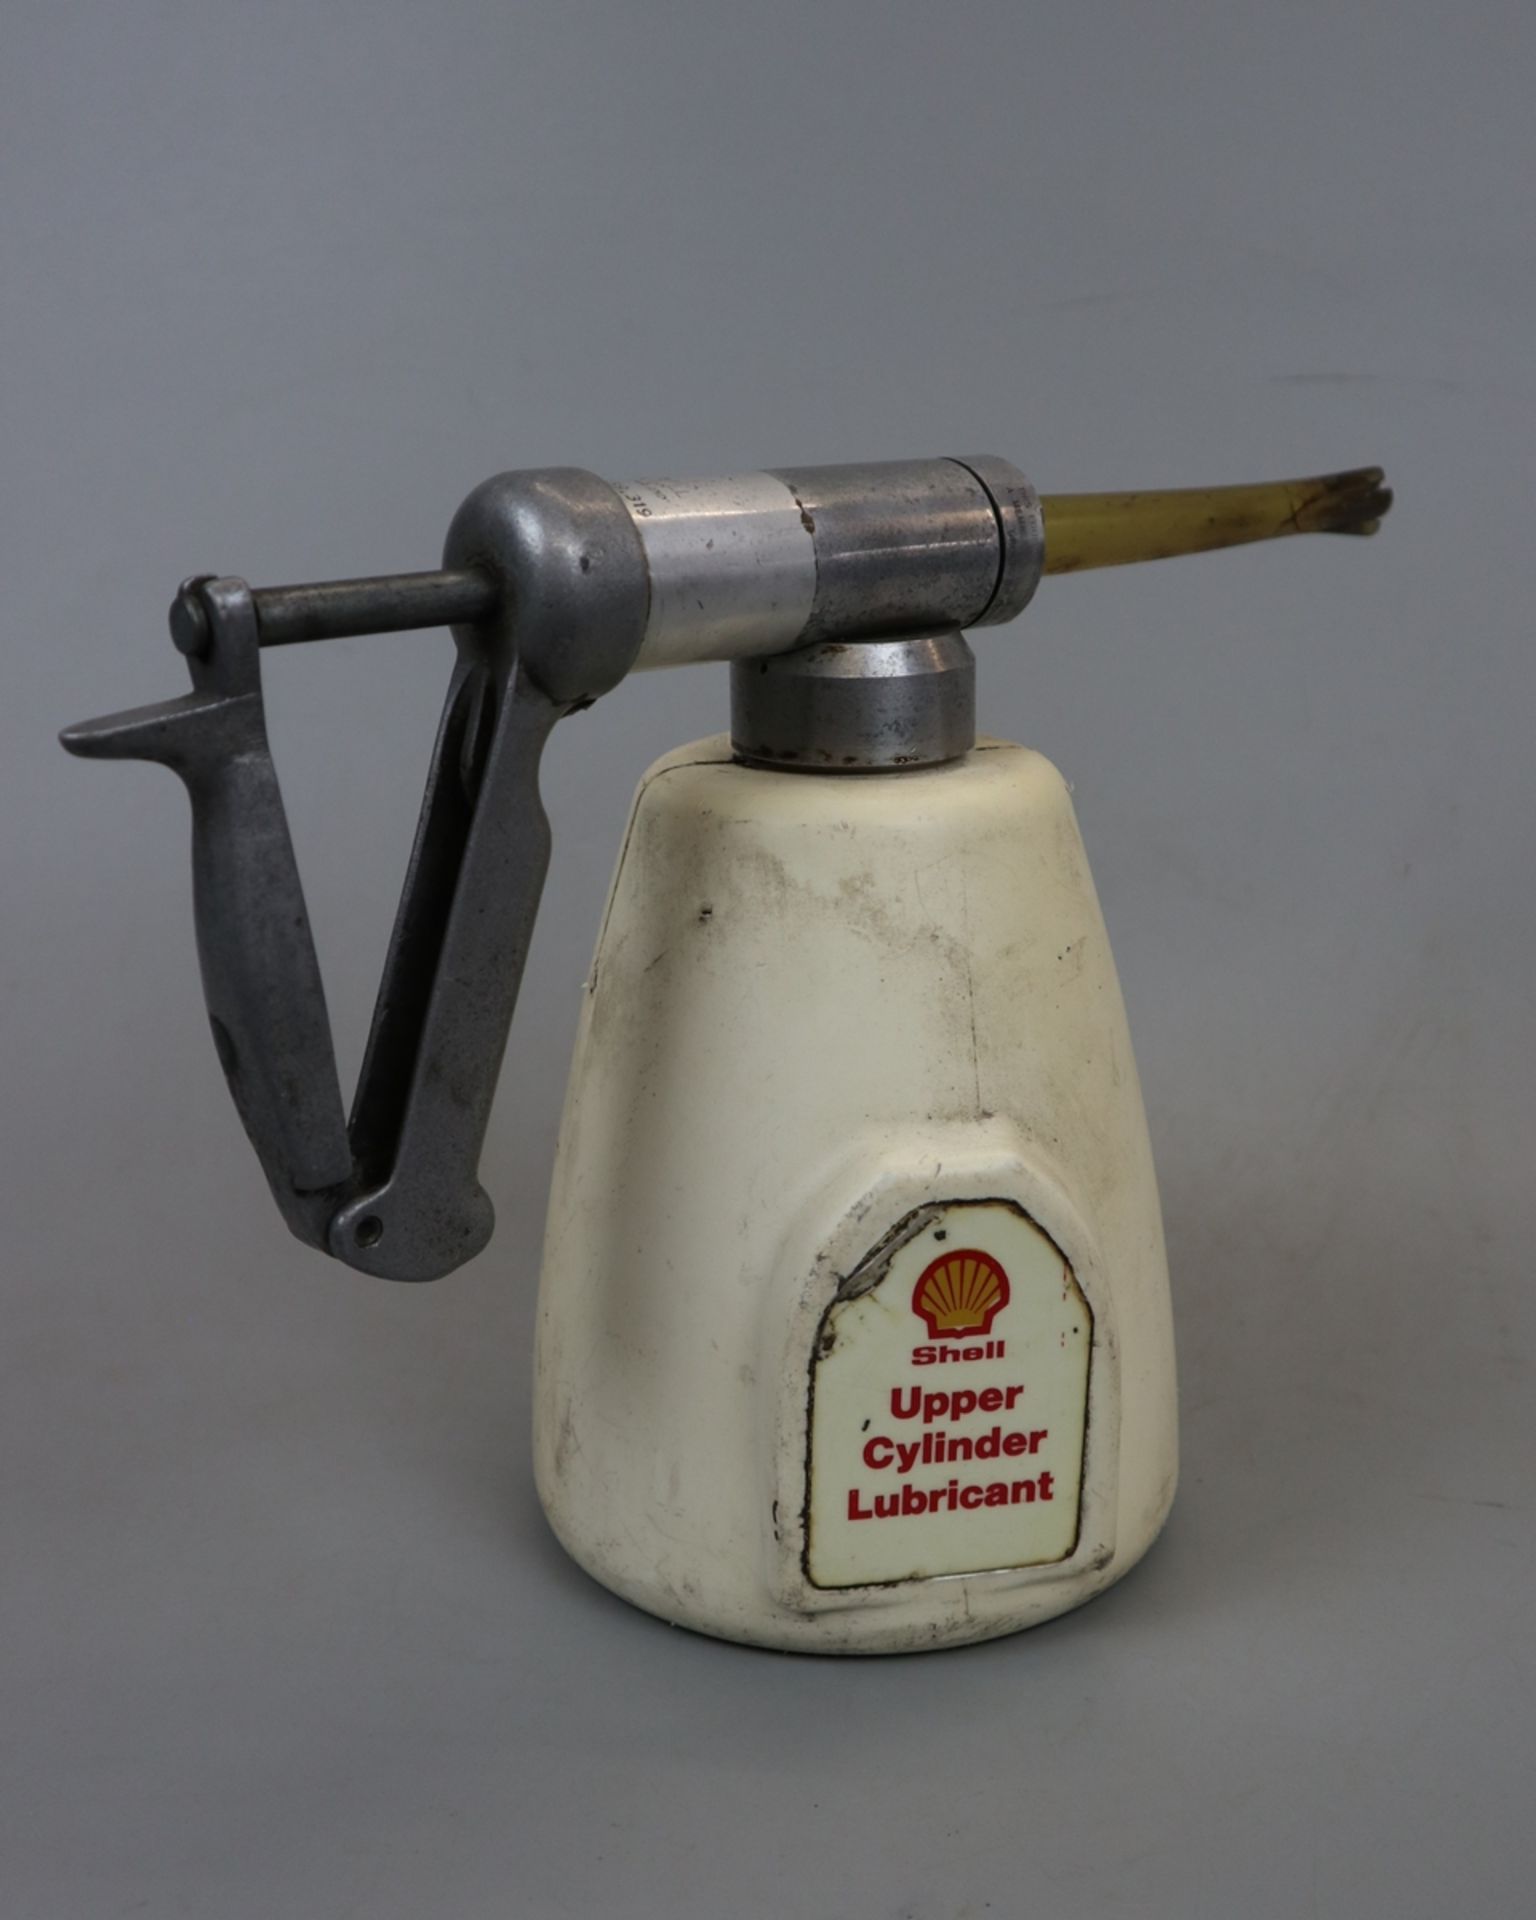 Vintage Shell upper cylinder lubricant can together with Exide battery filling bottle - Image 5 of 7